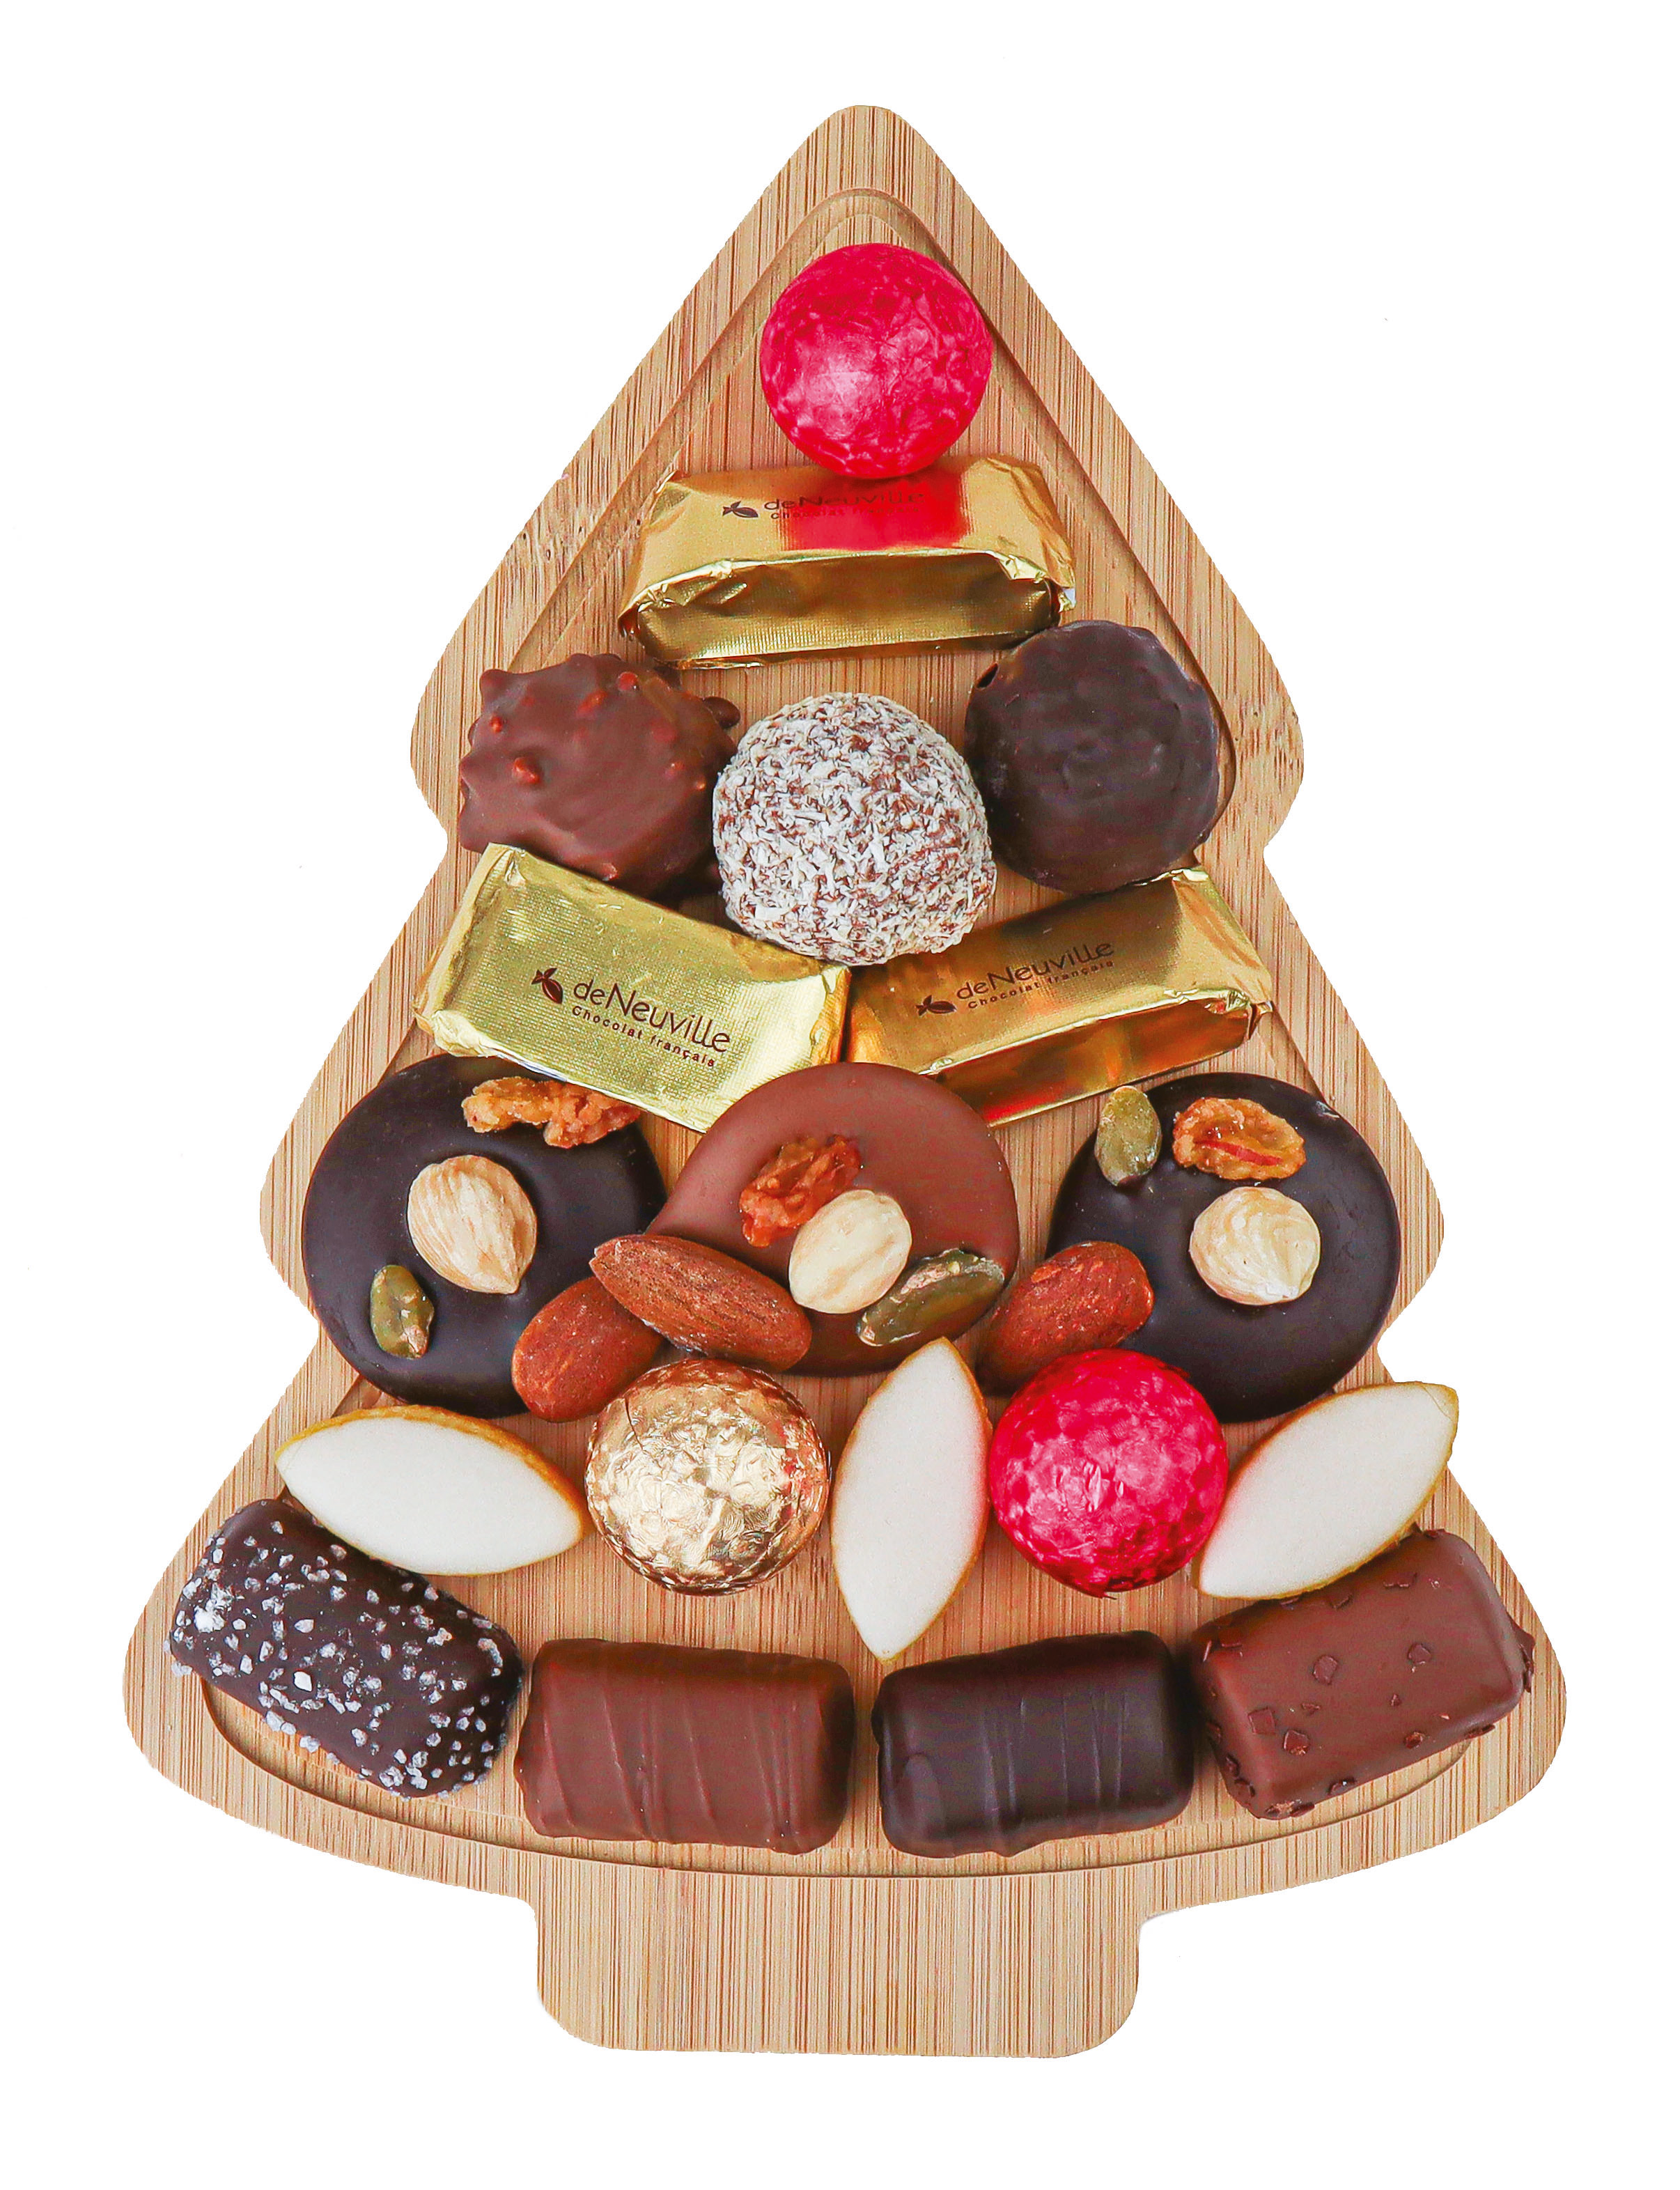 Chocolat Weiss - Ballotin de chocolat de Noël - édition limitée